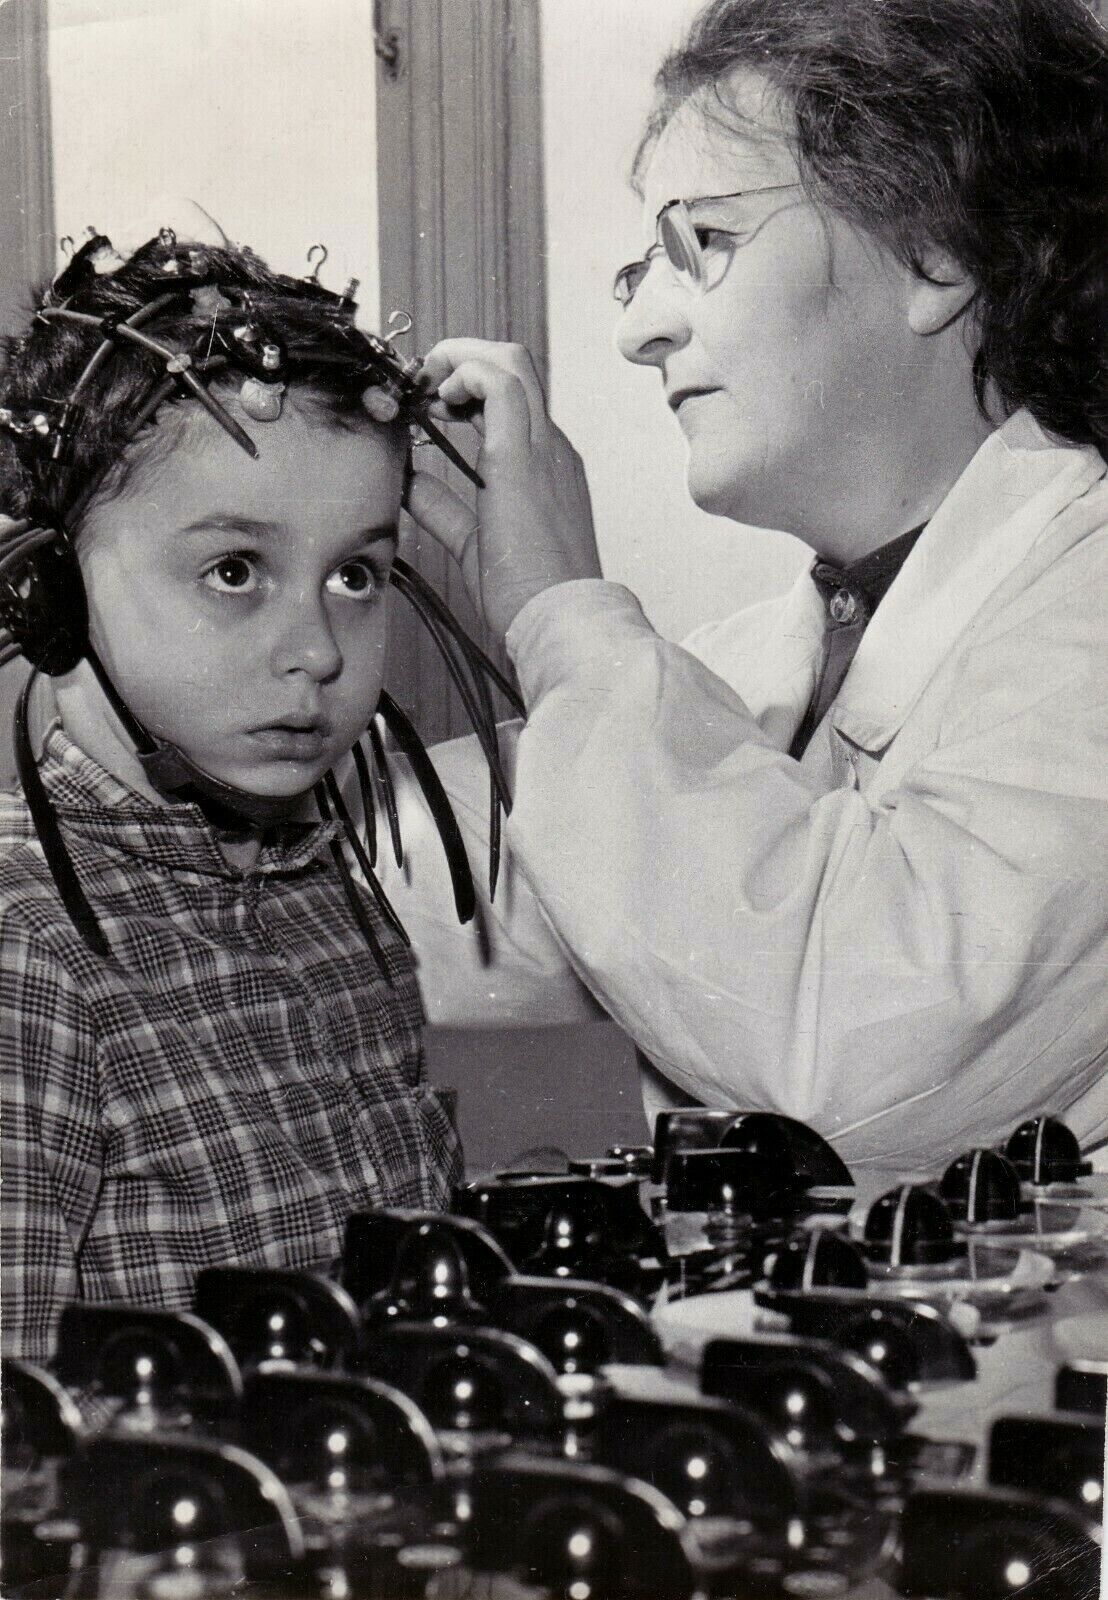 1970 Electroencephalogram brain experiments boy doctor neurons odd Russian photo